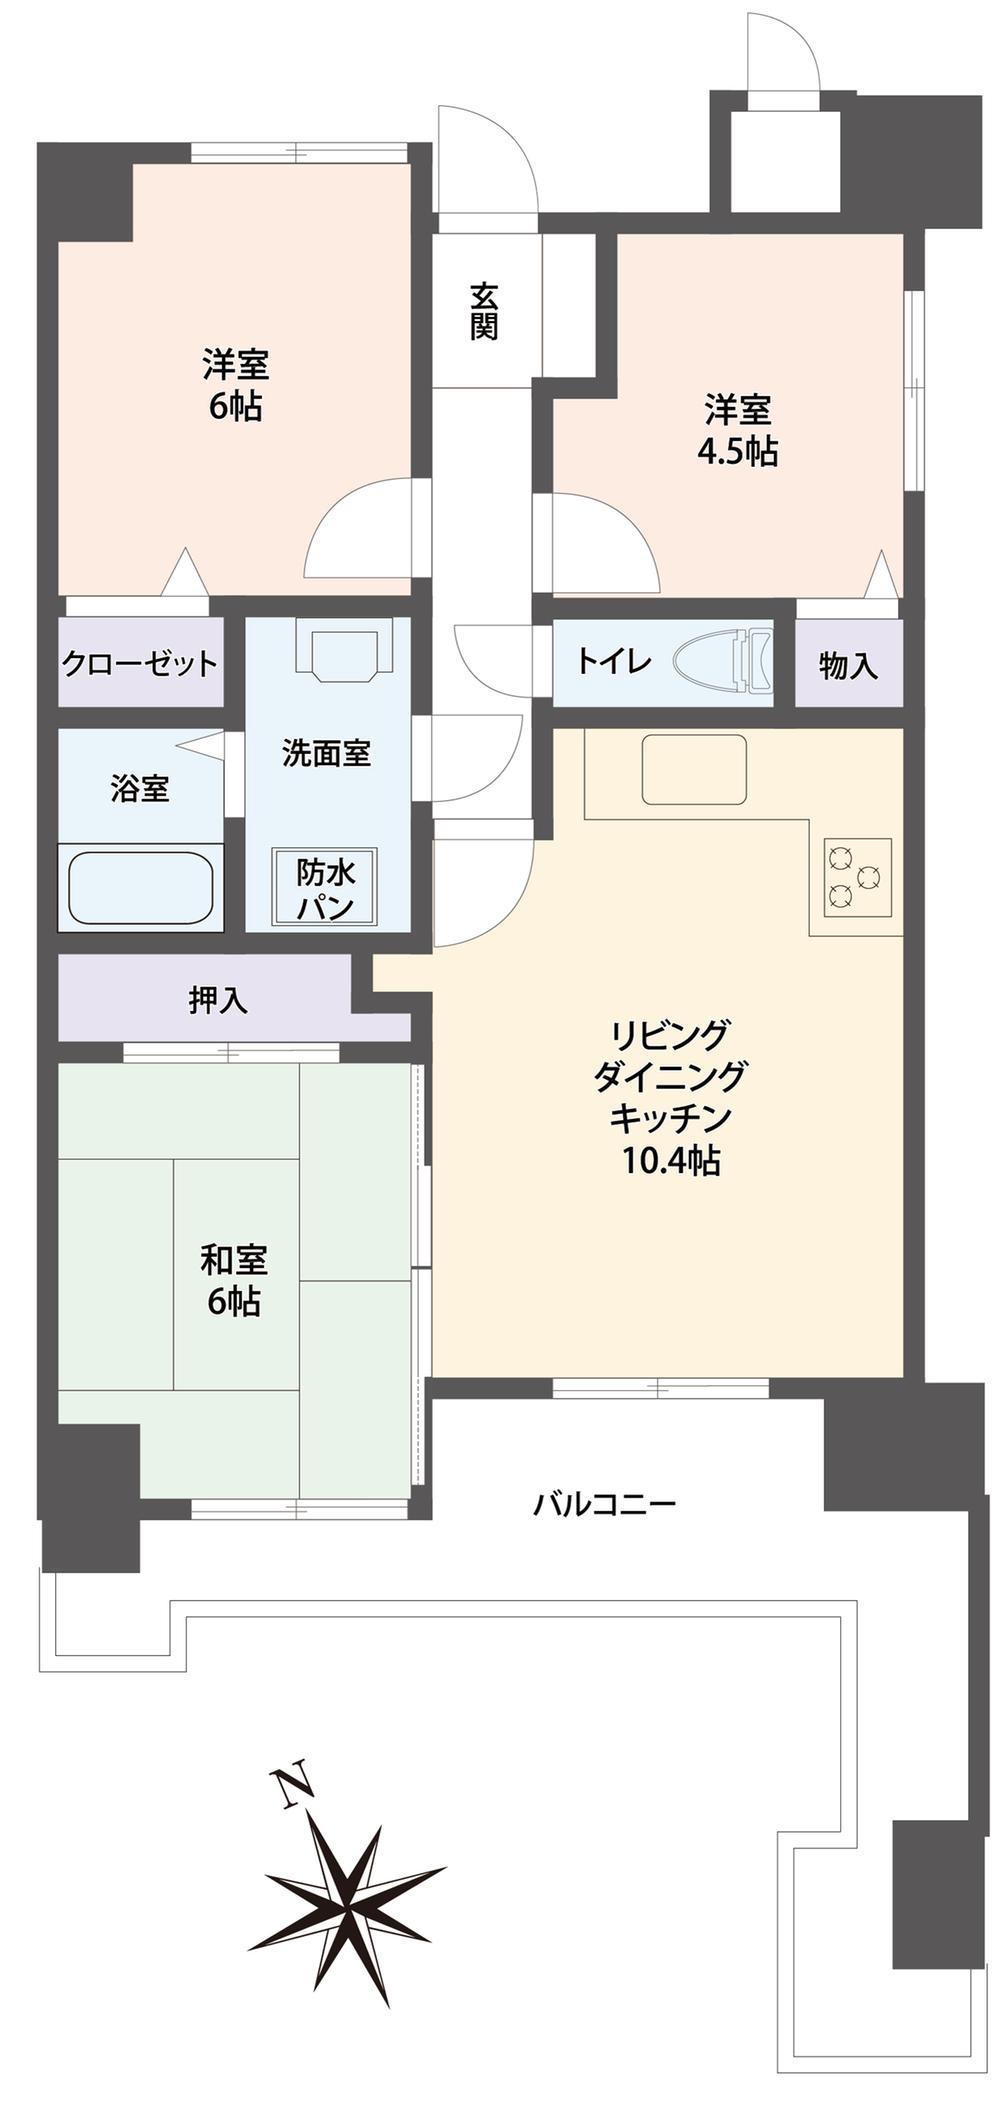 Floor plan. 3LDK, Price 10.4 million yen, Occupied area 60.53 sq m , Balcony area 18.23 sq m